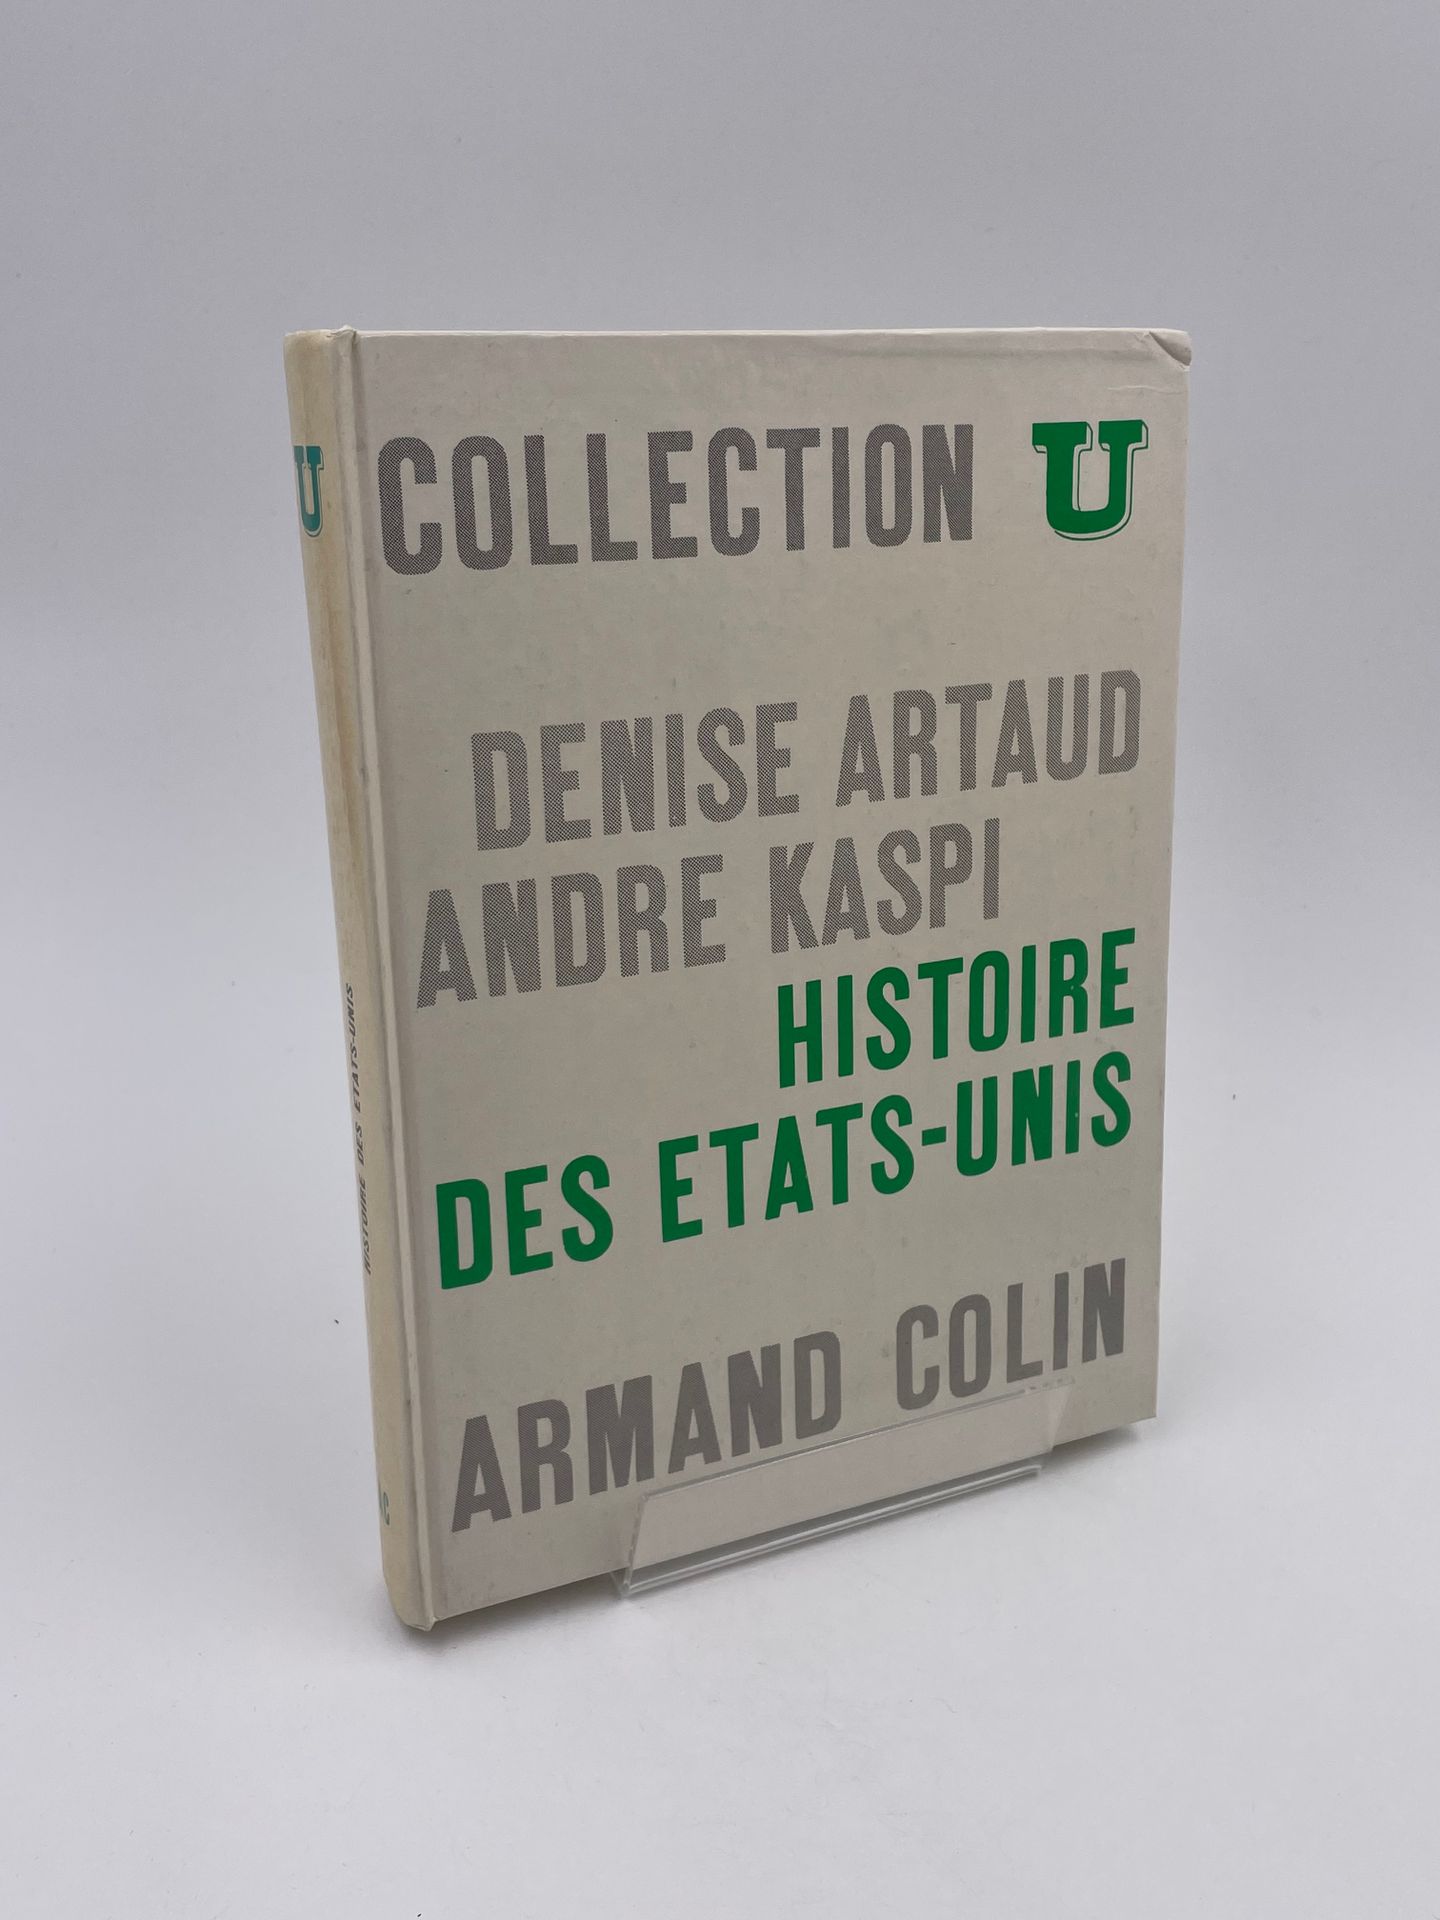 Null 1 Volume : "HISTOIRE DES Etats-Unis", Denise Artaud, André Kaspi, Collectio&hellip;